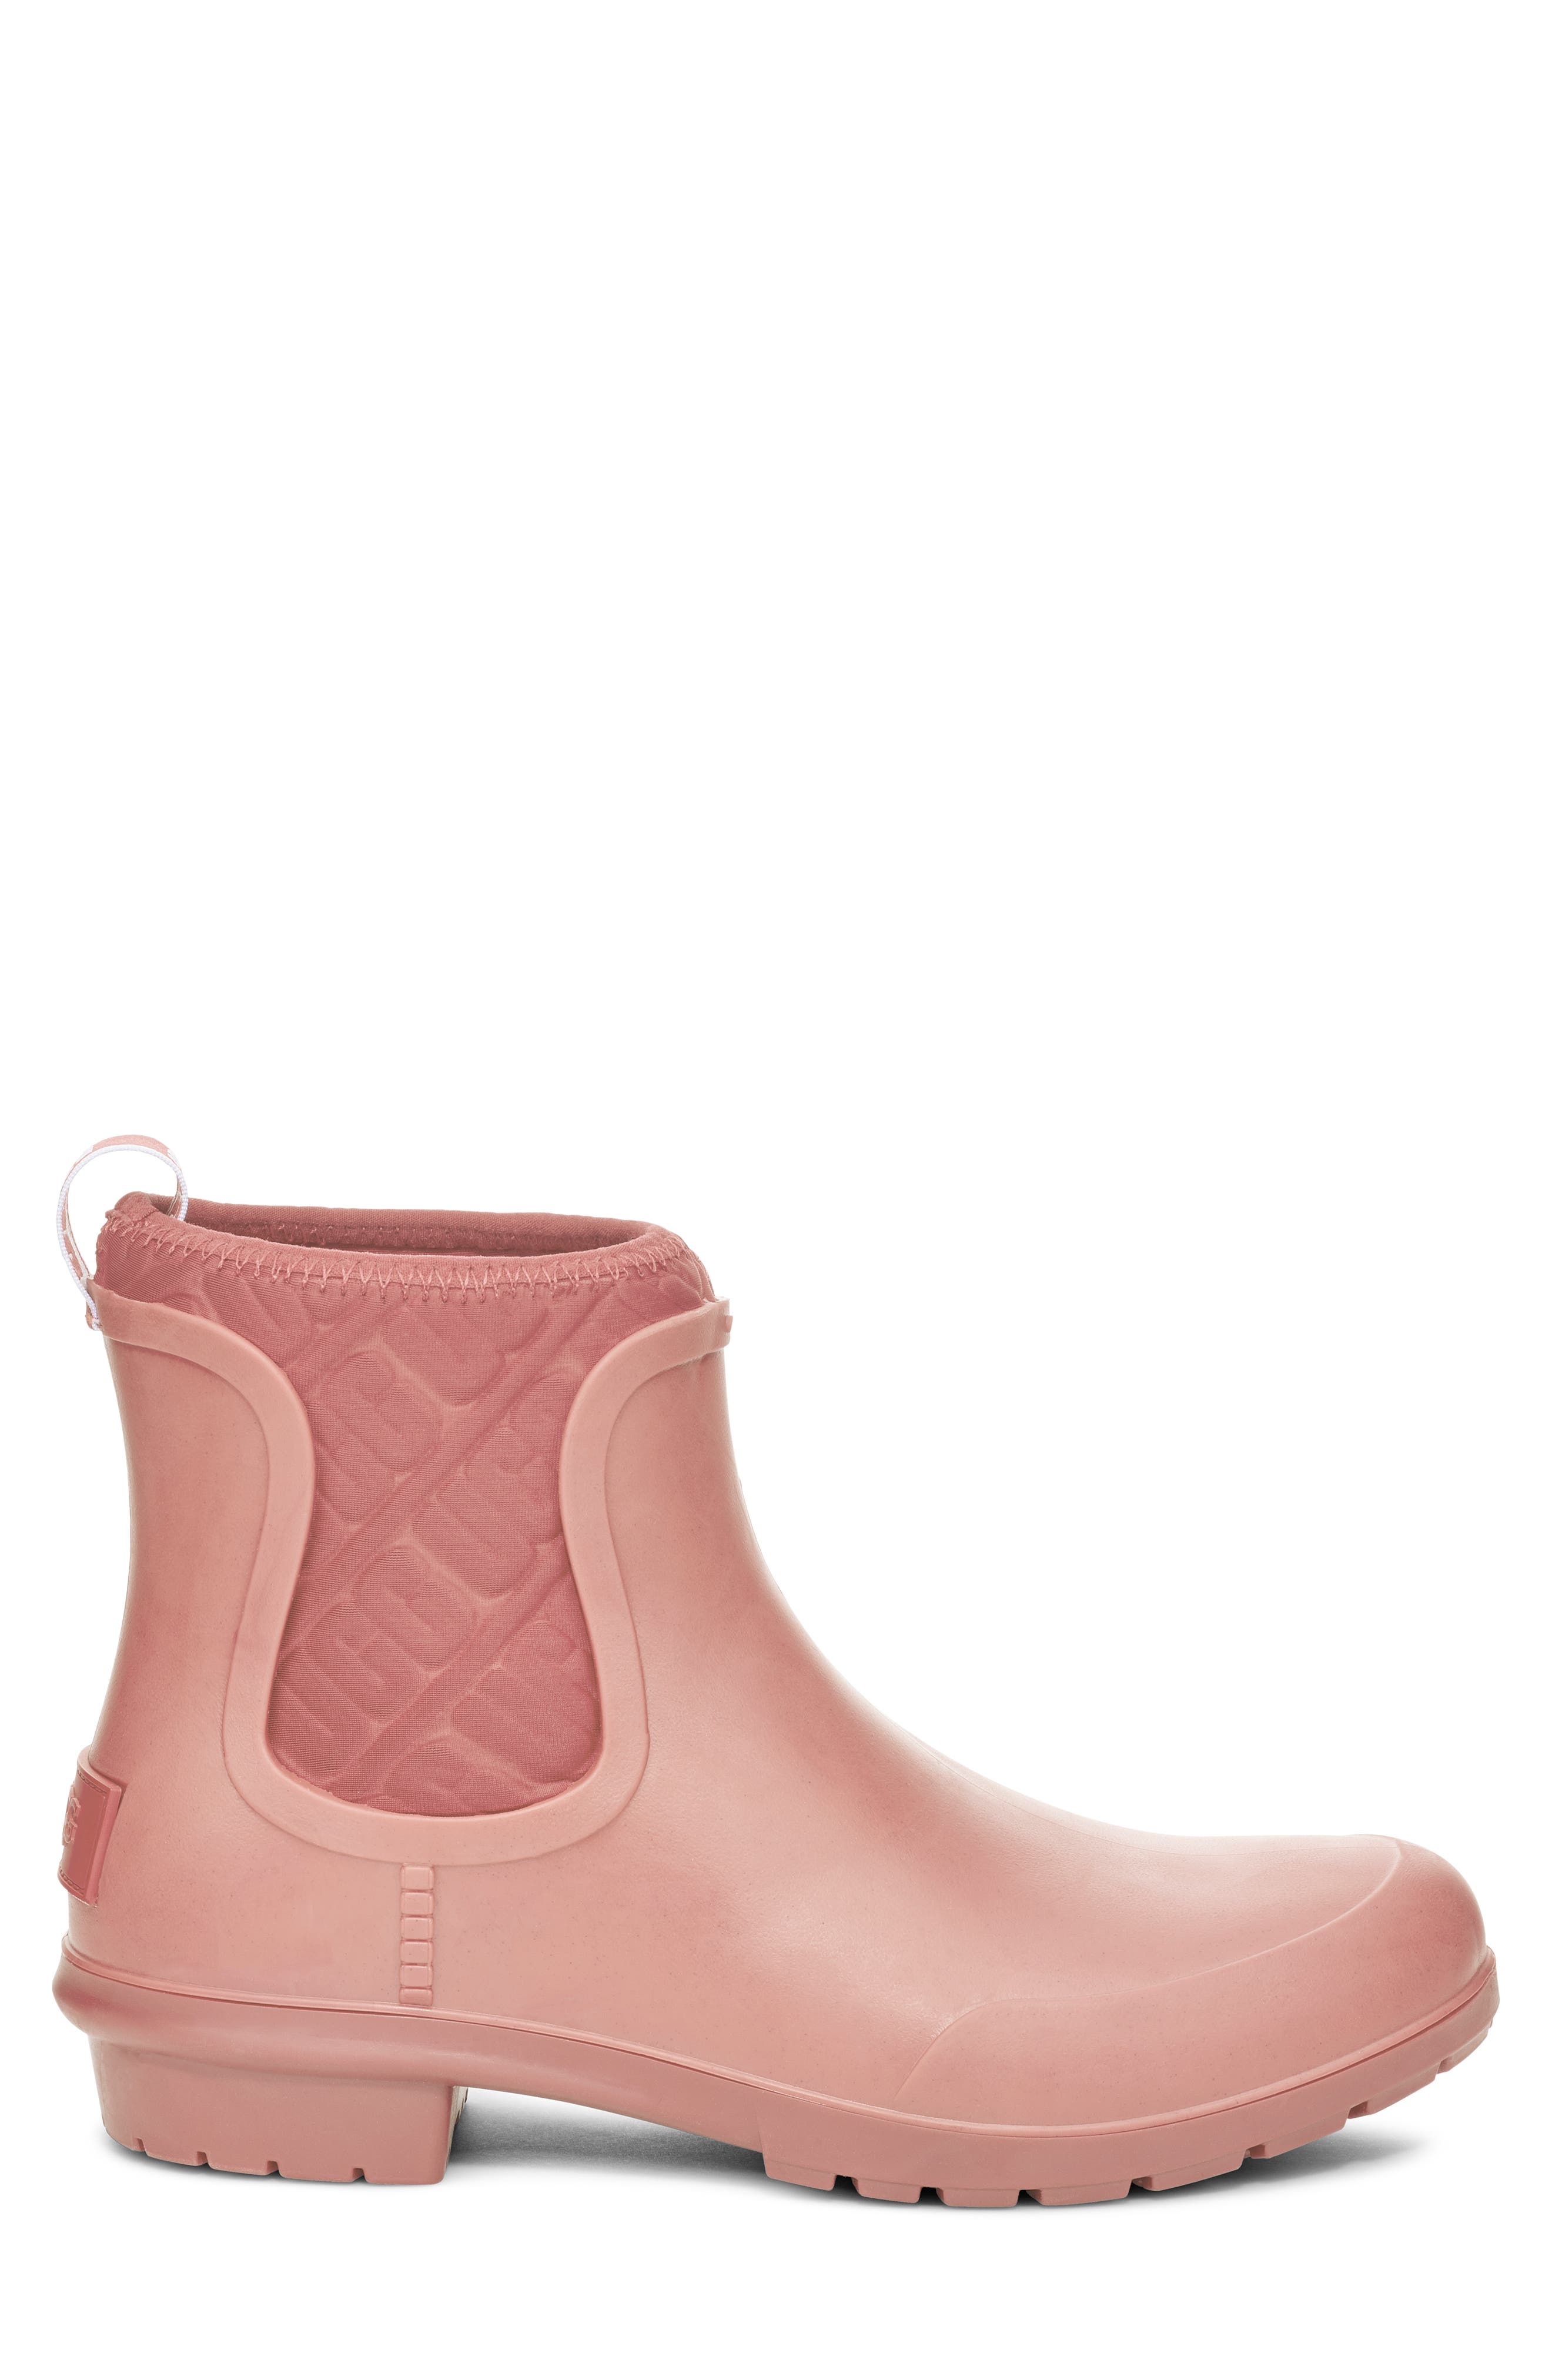 ugg rain boots pink